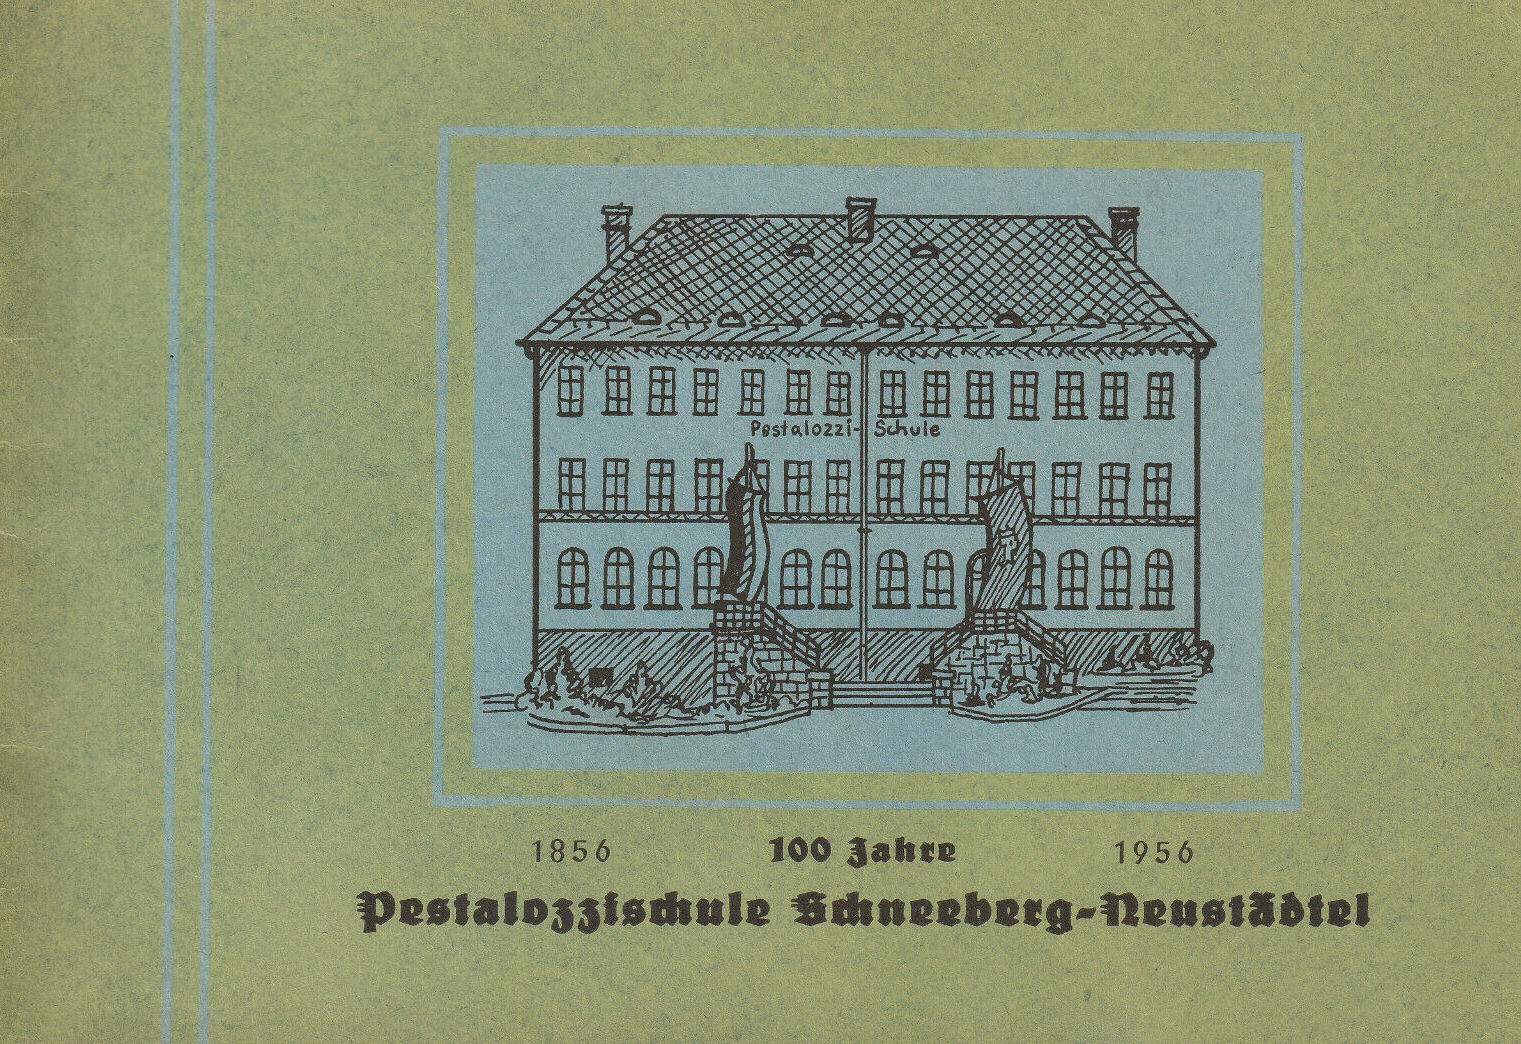 100-Jahre-Pestalozzischule-Schneeberg-Neustädtel-1856-1957